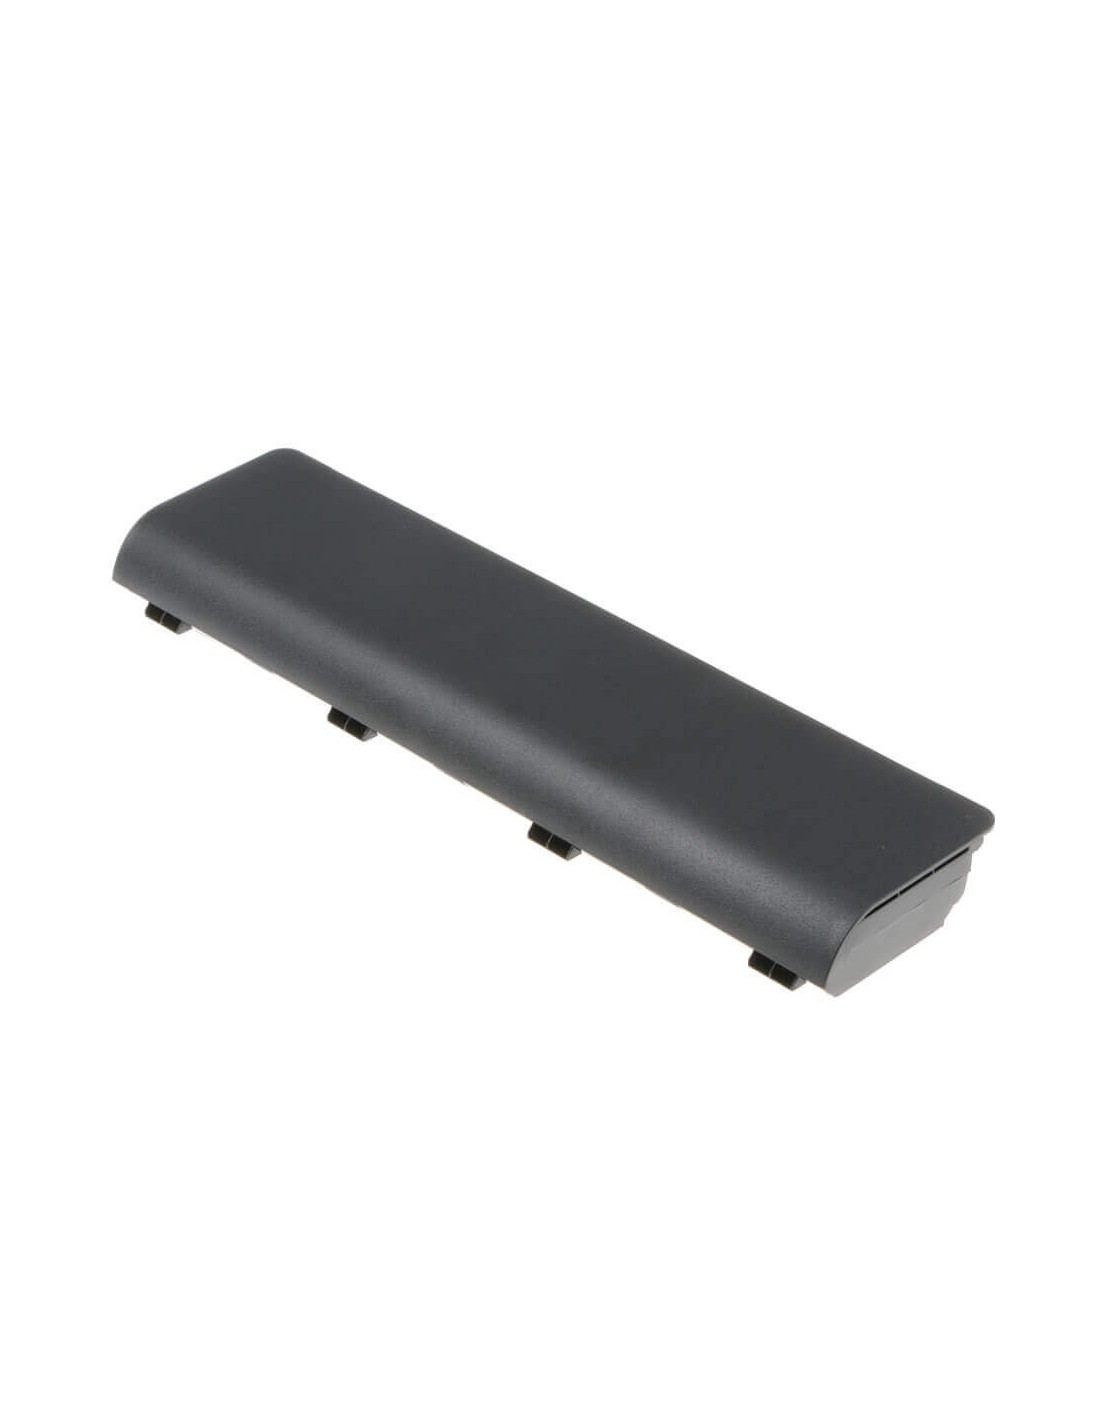 Black Battery for Toshiba Satellite C40-ad05b1, Satellite C40-at15b1, Satellite C40-as20w1 10.8V, 4400mAh - 47.52Wh